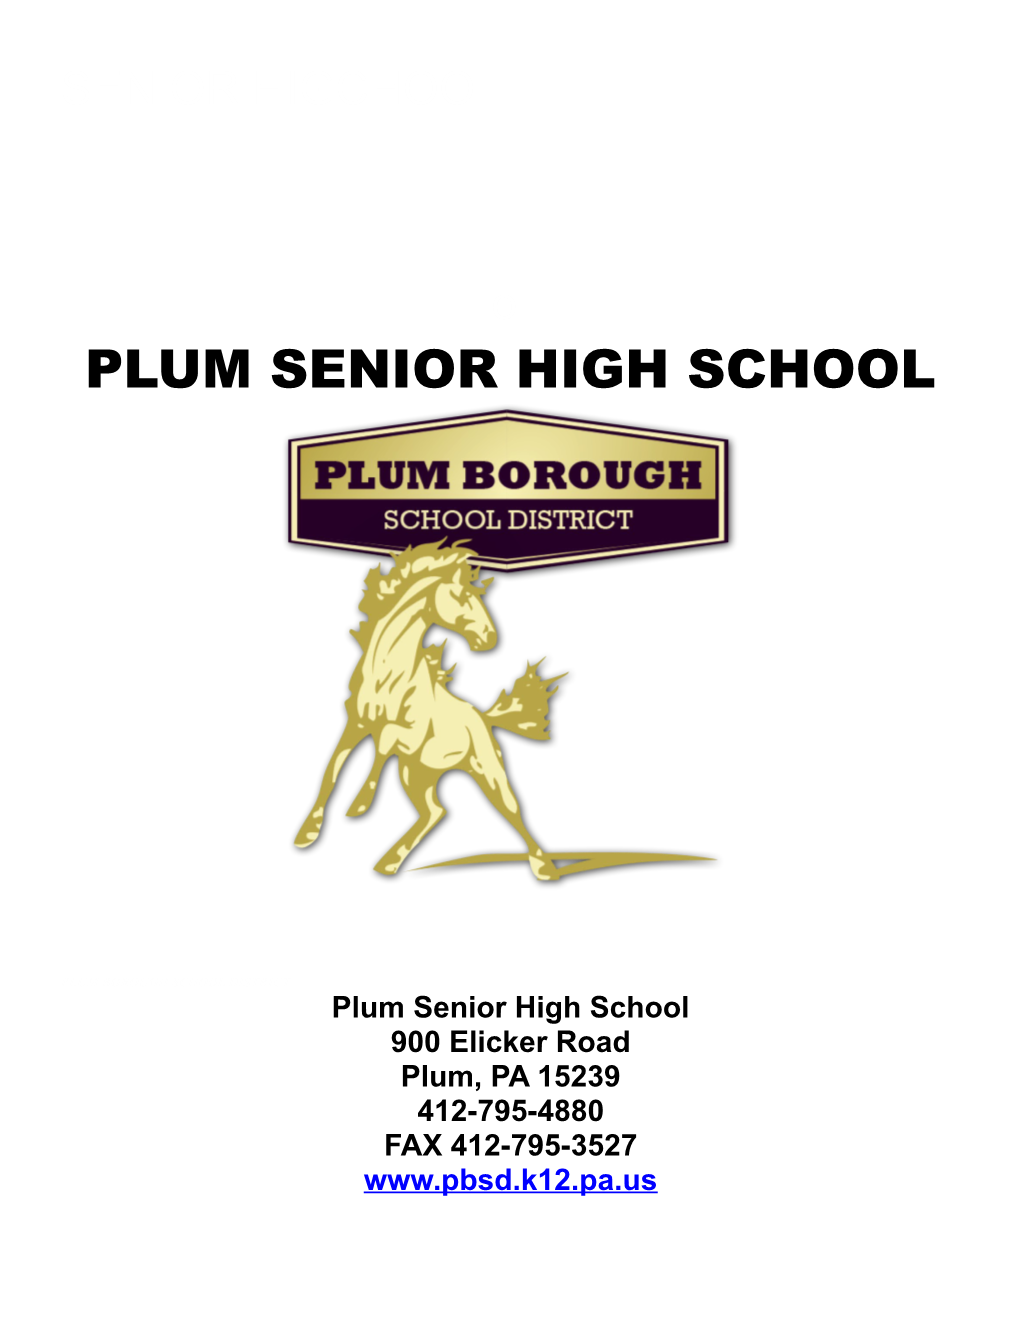 Plum Borough School District